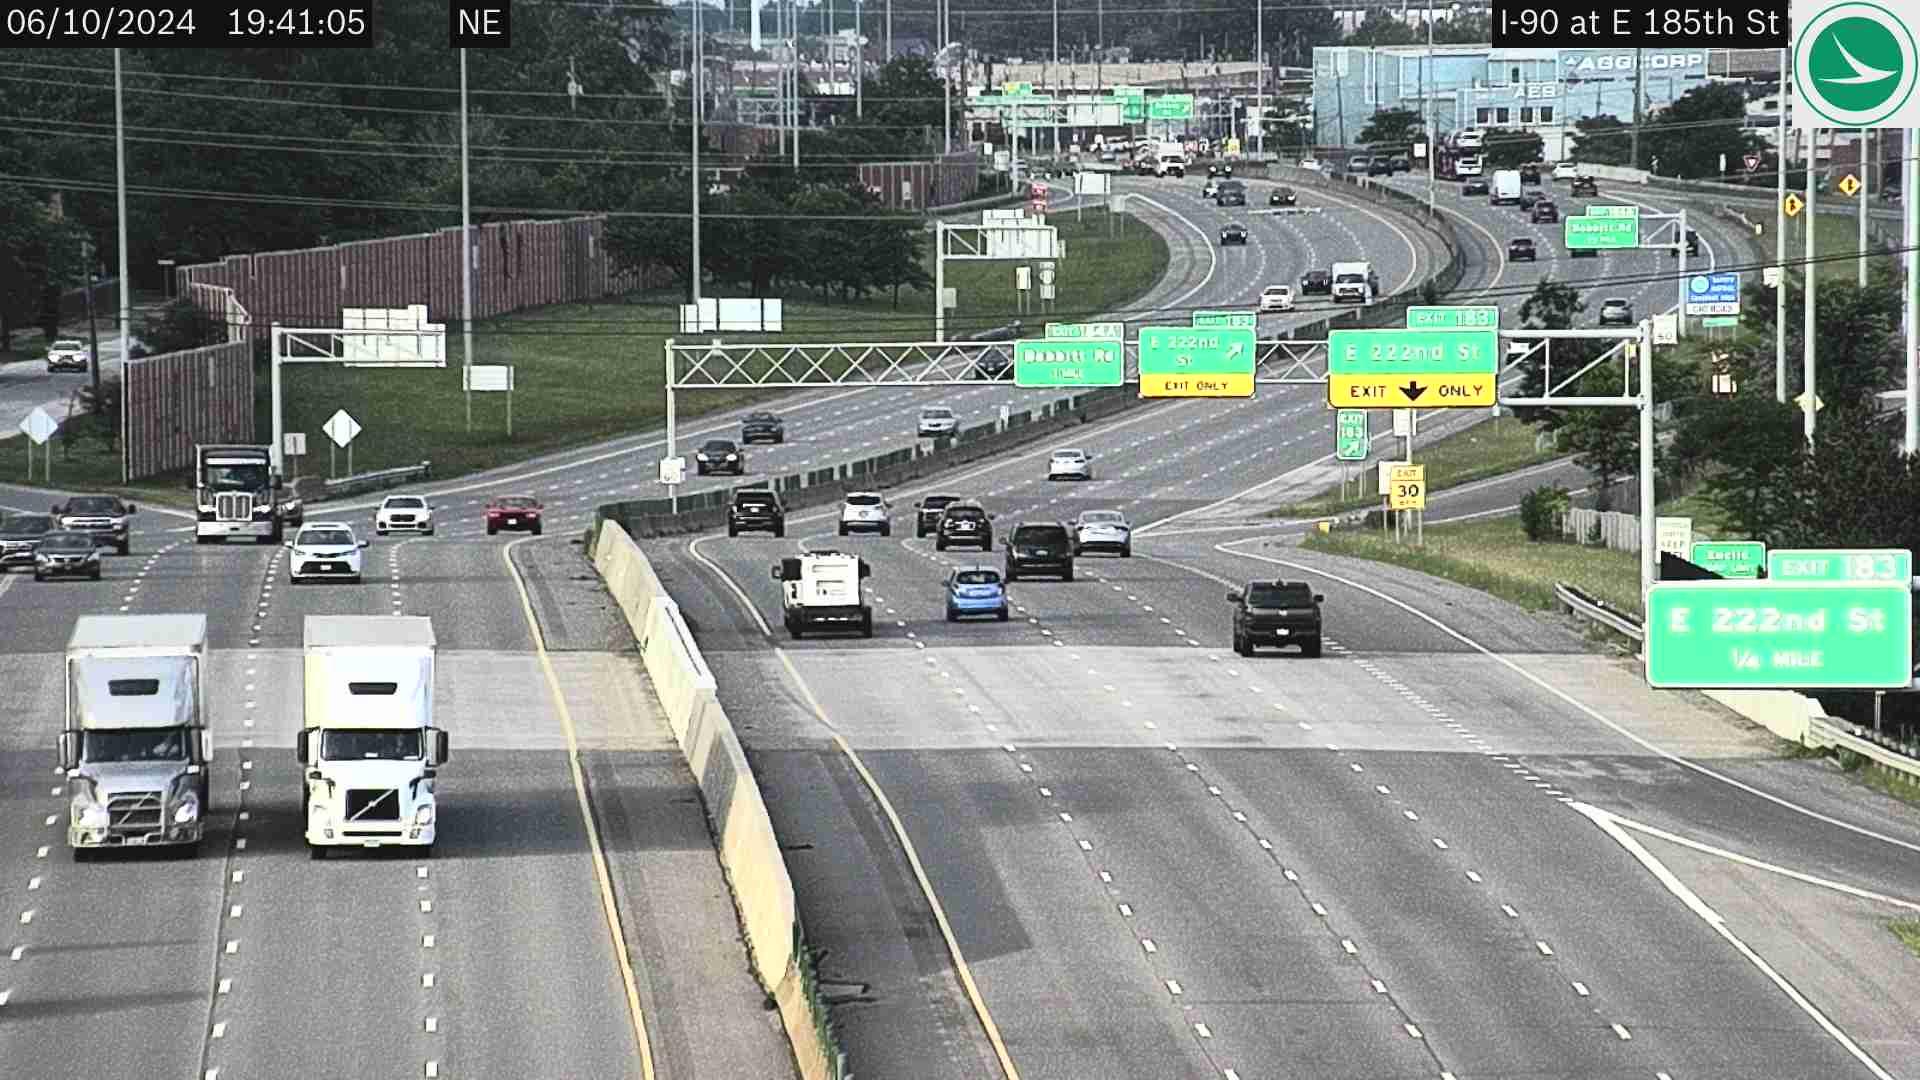 Traffic Cam Cleveland: I-90 at E 185th St